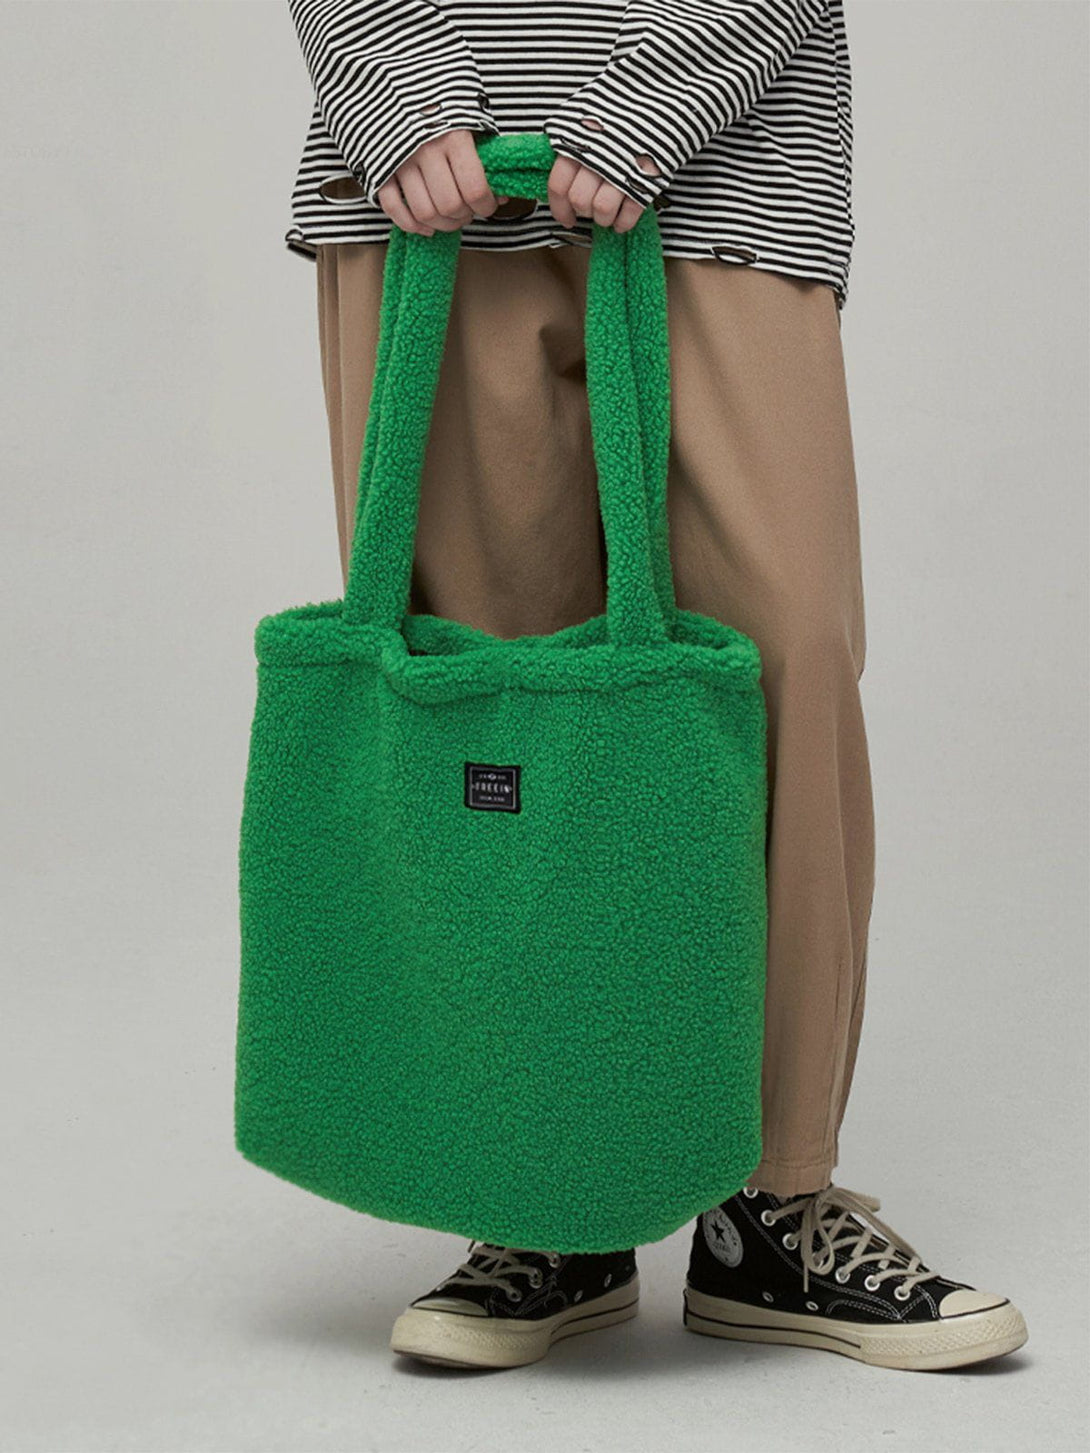 Levefly - Lambswool Shoulder Bag - Streetwear Fashion - levefly.com